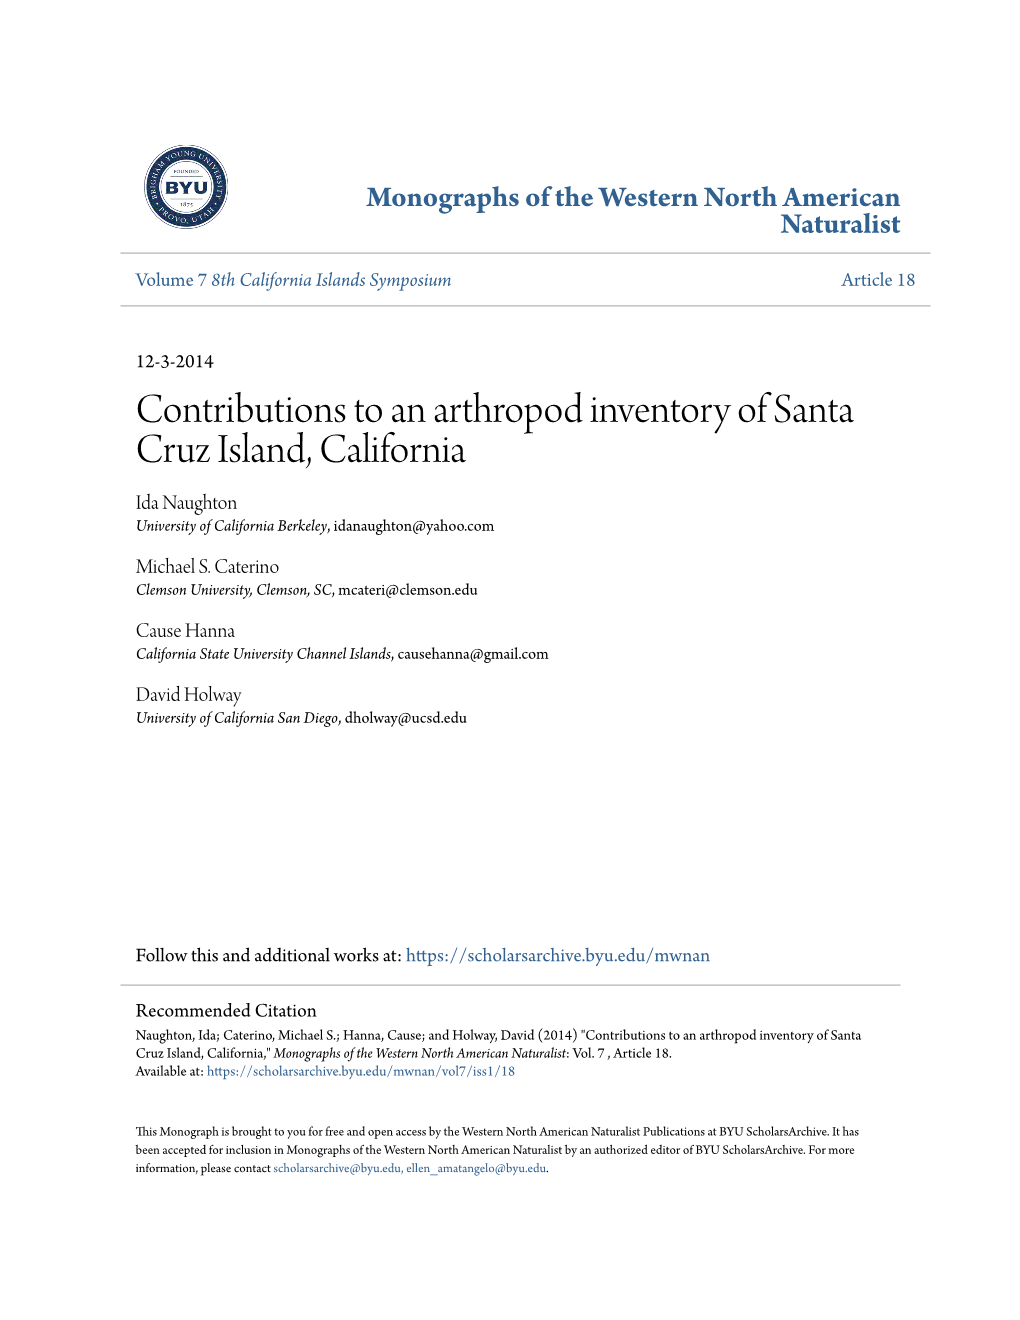 Contributions to an Arthropod Inventory of Santa Cruz Island, California Ida Naughton University of California Berkeley, Idanaughton@Yahoo.Com